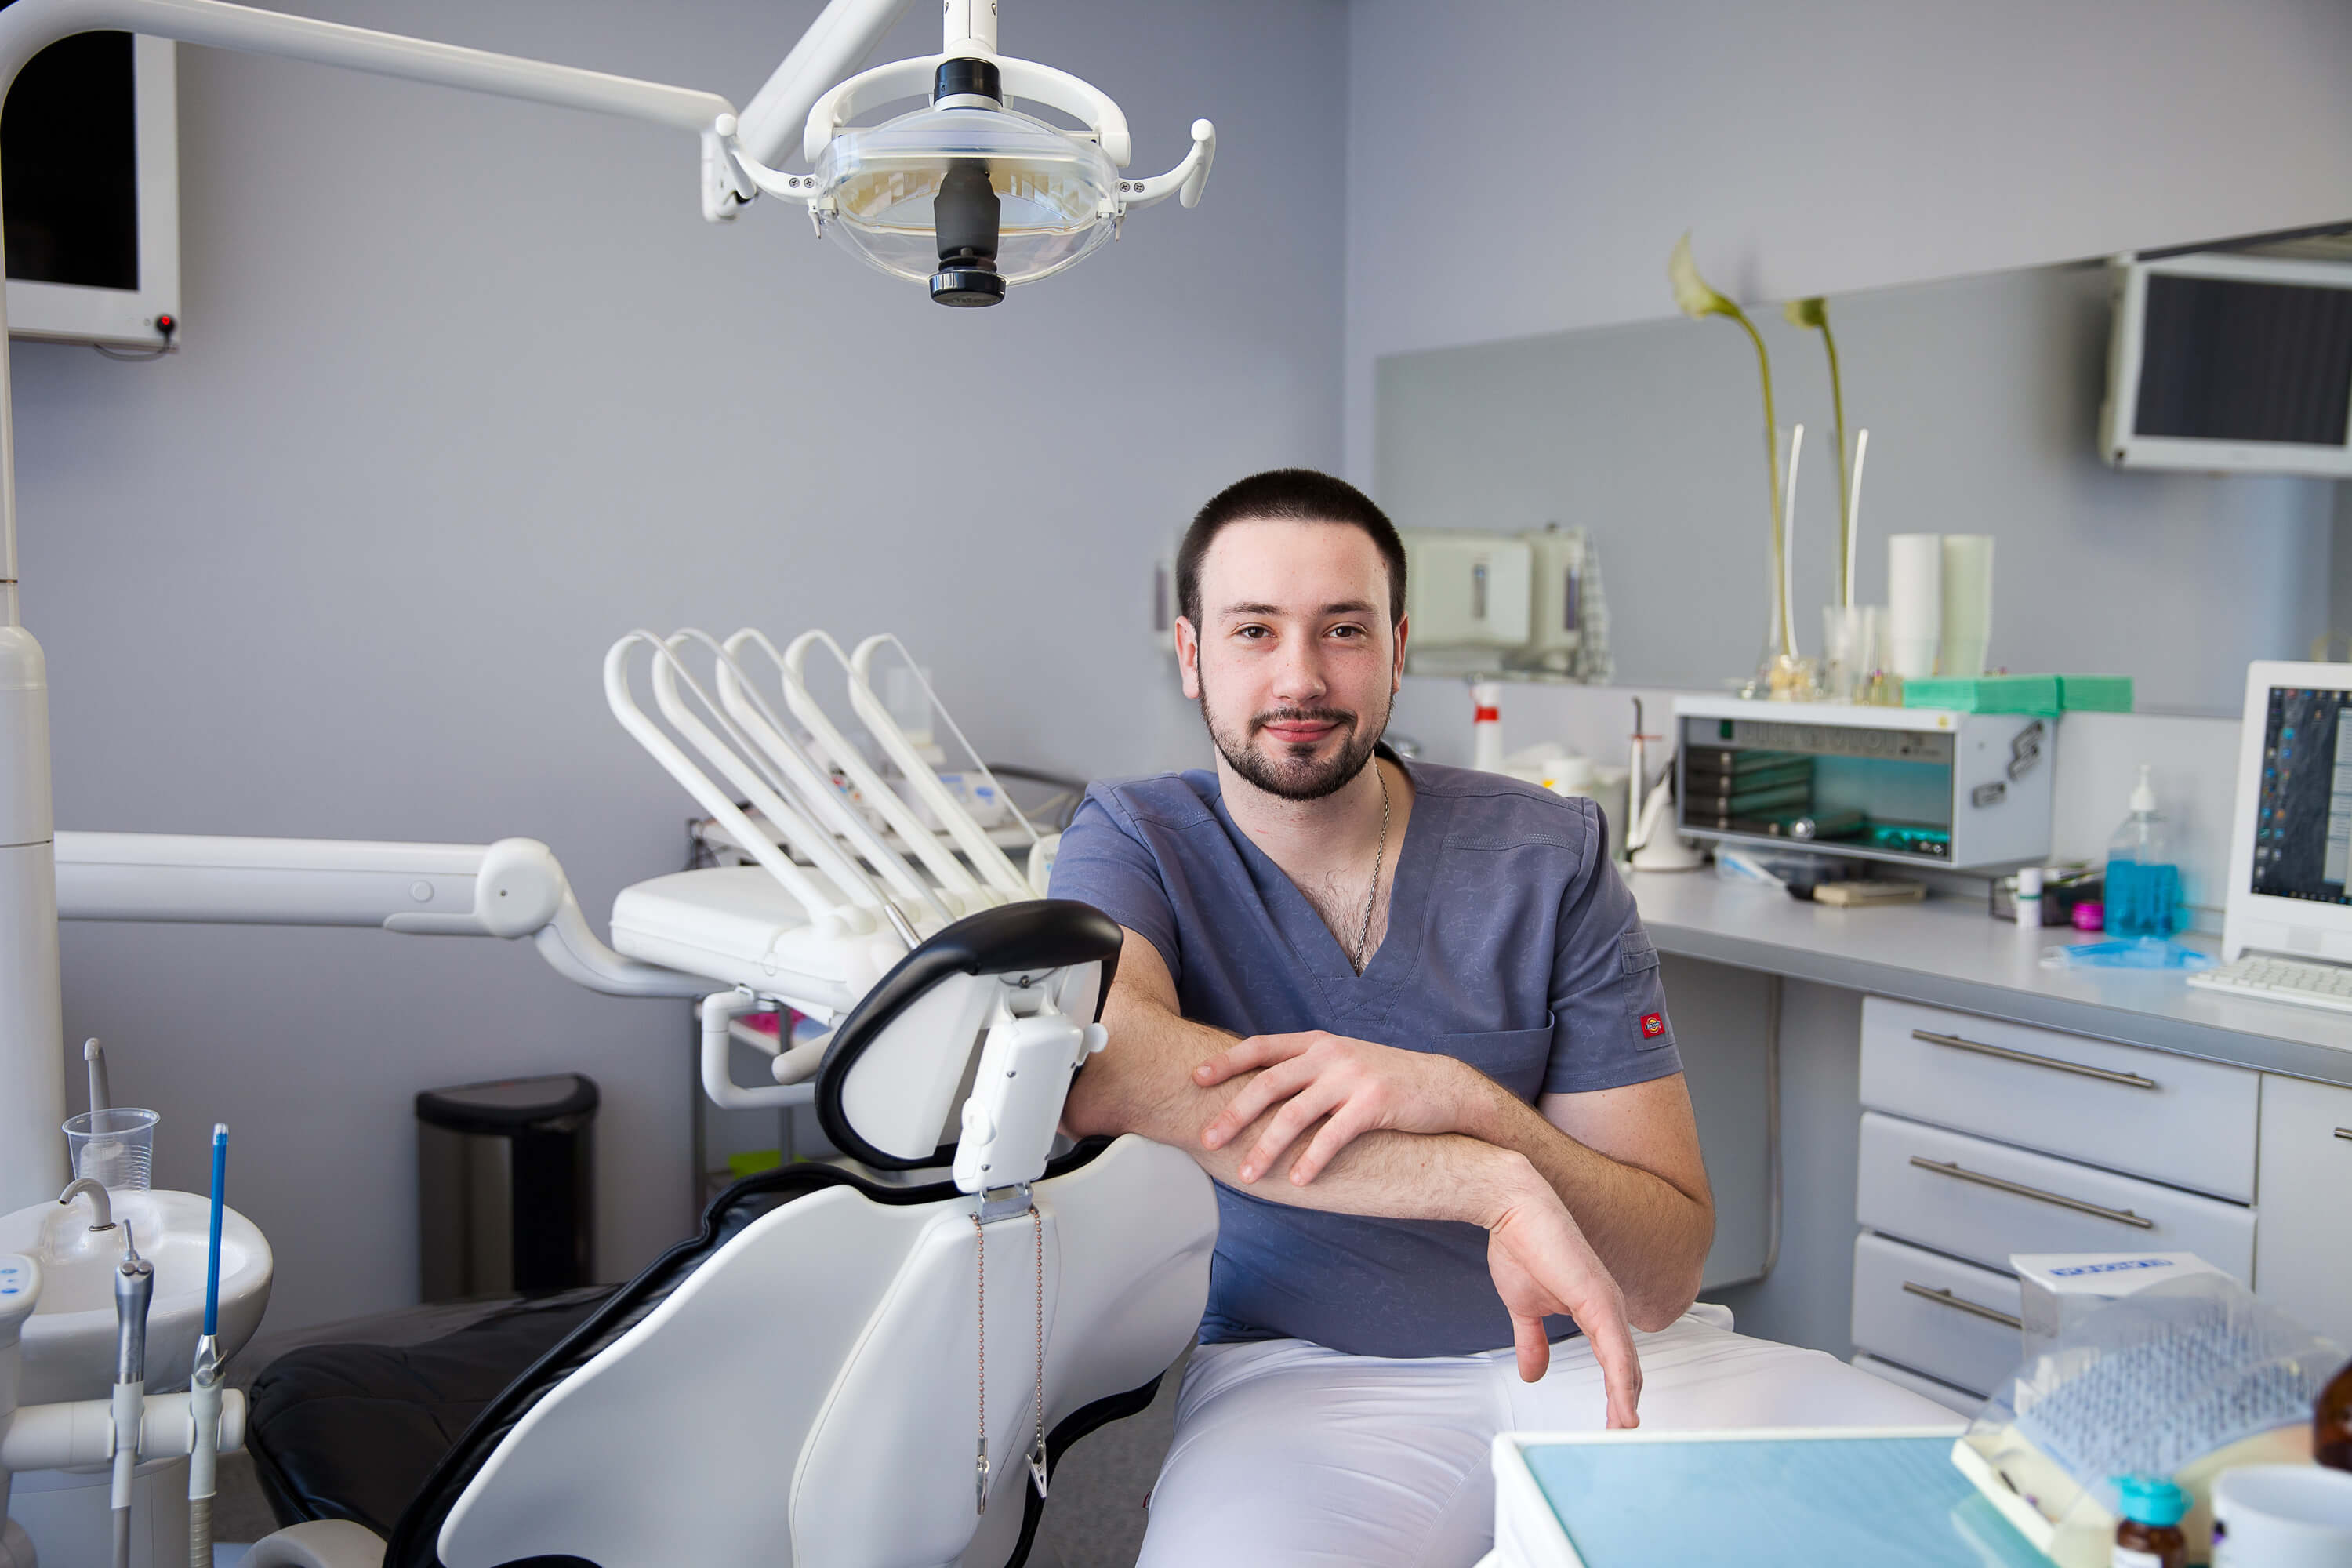 Частный врач стоматолог. Стоматолог мужчина. Стоматология врачи.